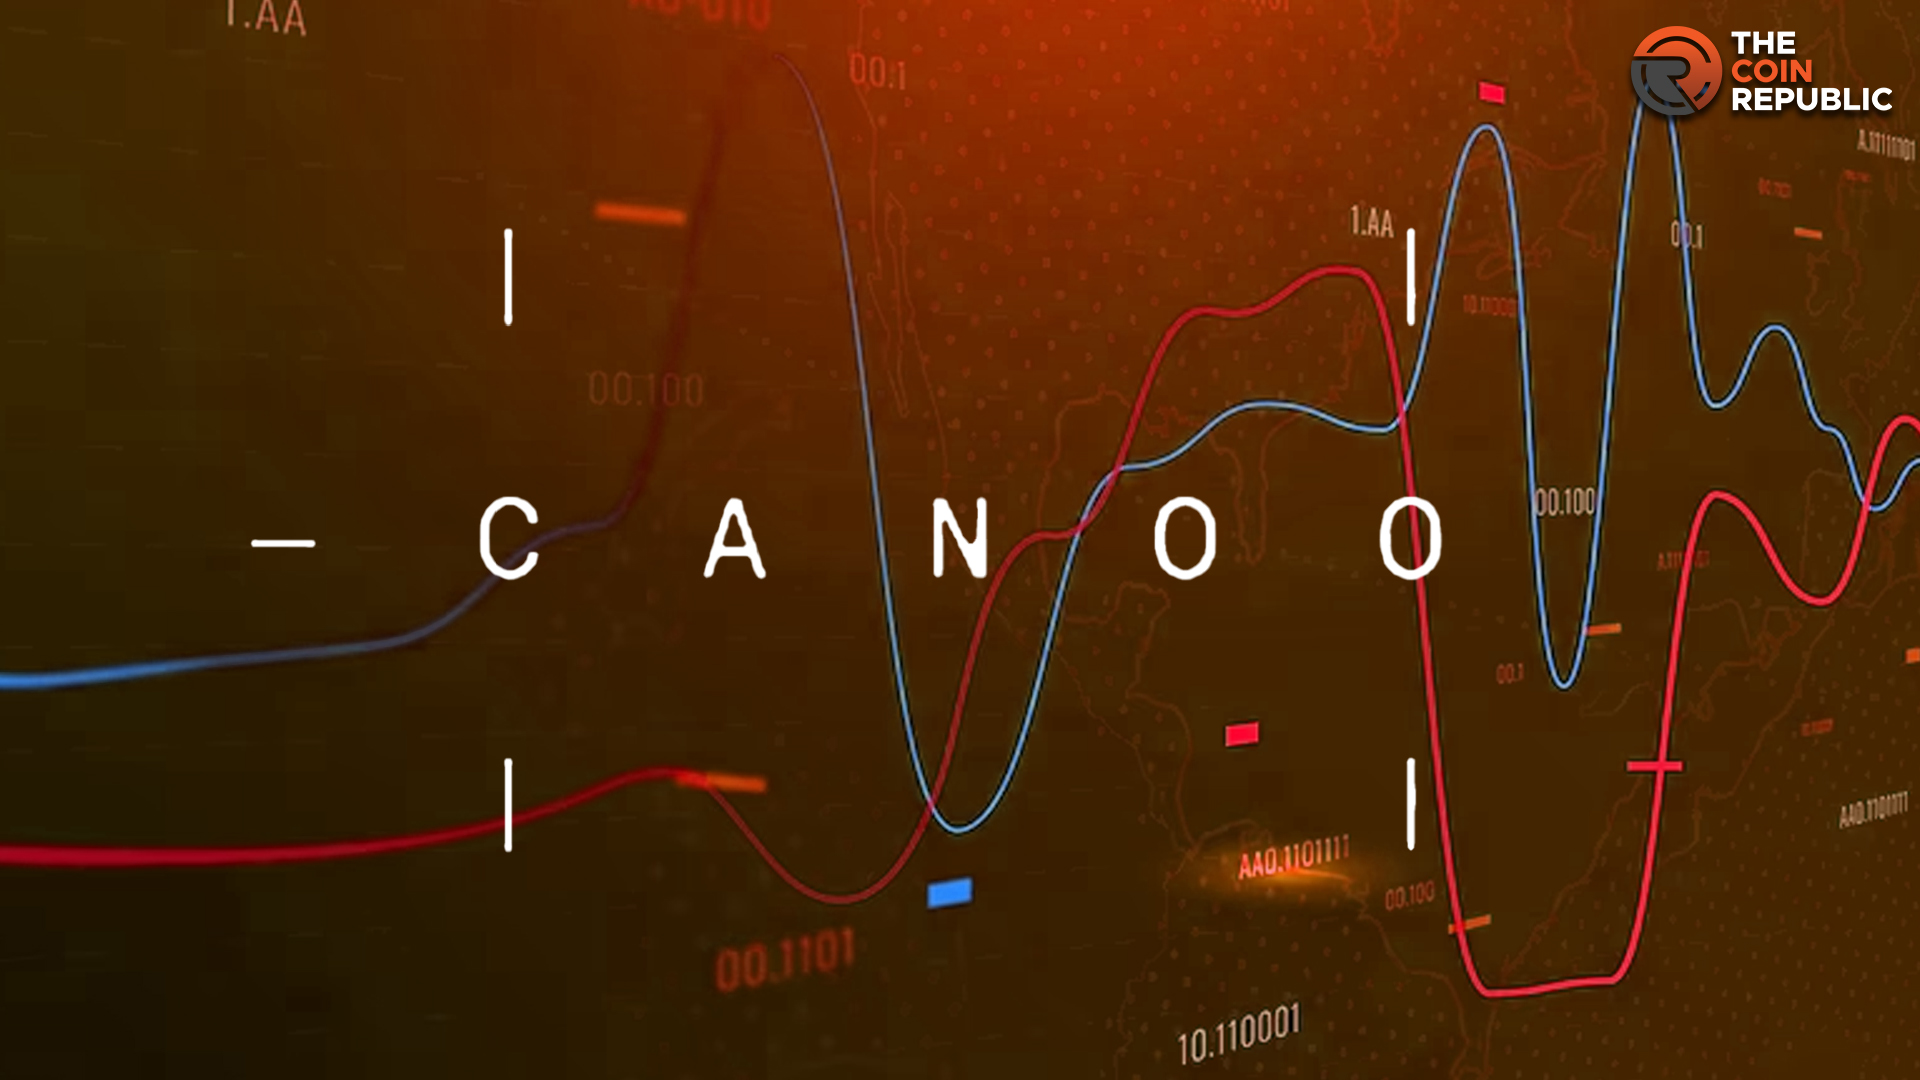 Canoo Inc. NASDAQ: GOEV Stock Price Roadmap To $5 in 2023 -Report